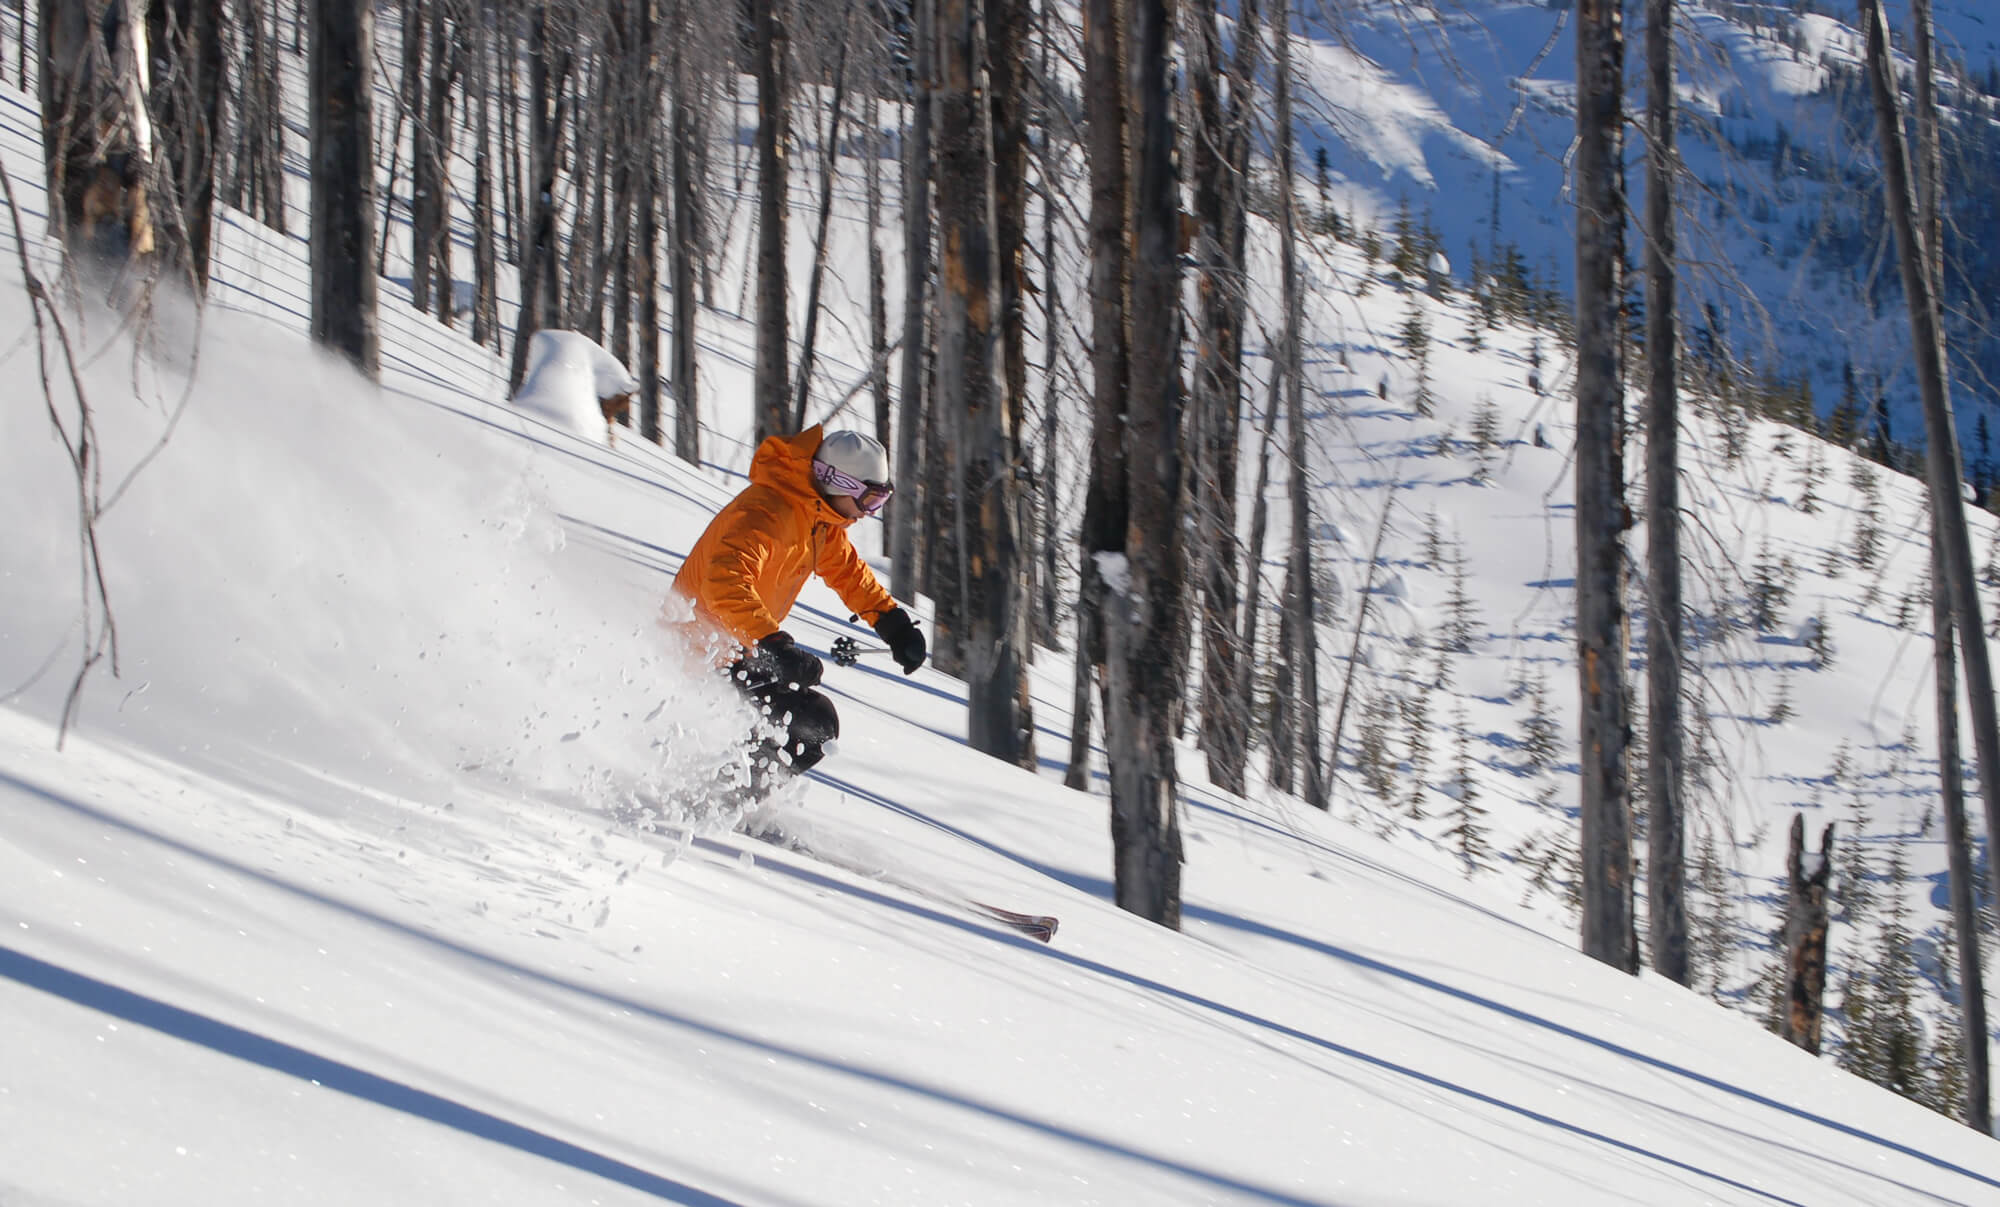 Tree powder skier